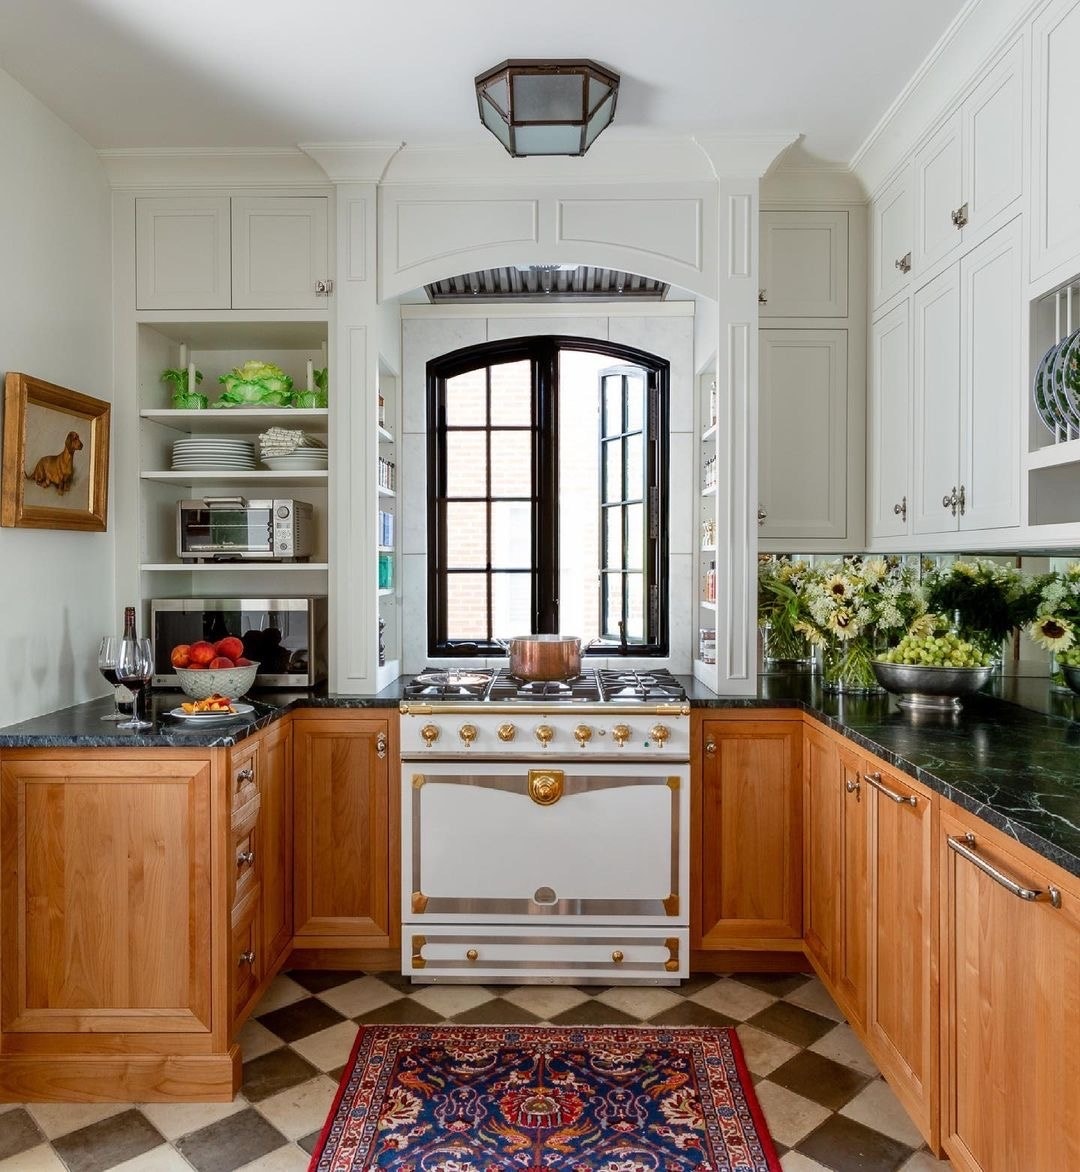 Arch Window Over Stove Adds Design Interest to Kitchen | Pella